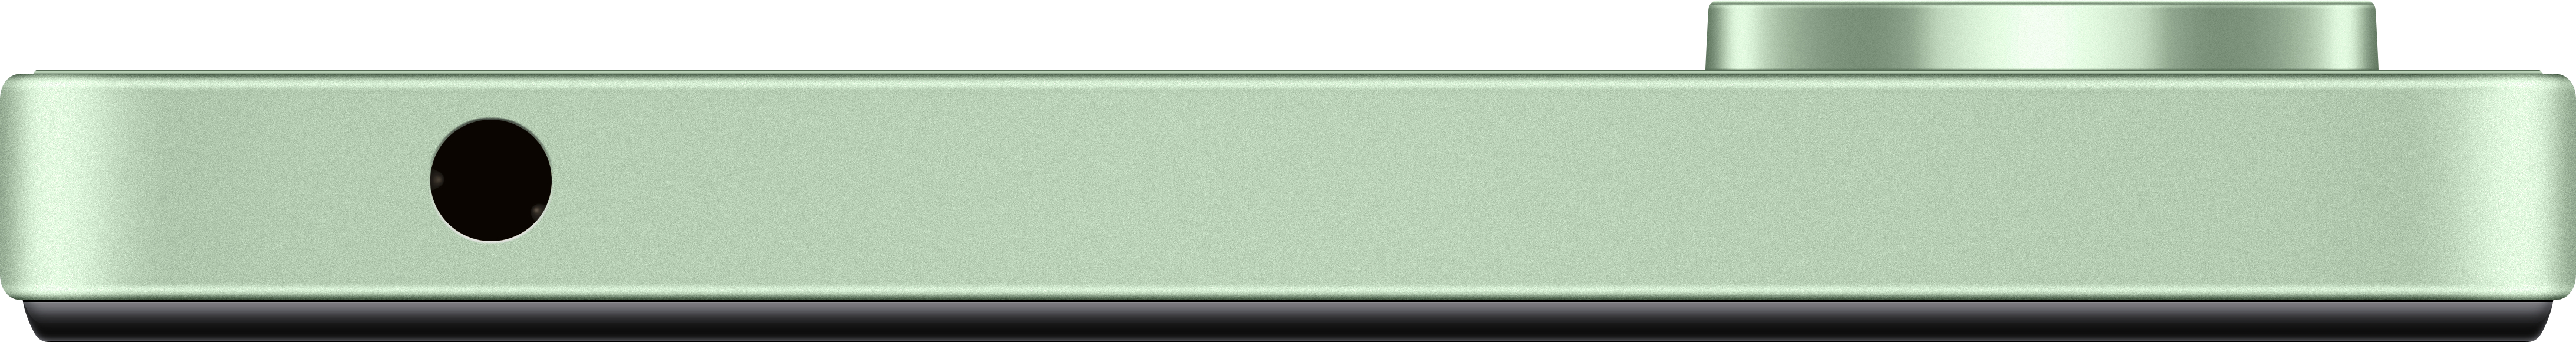 GB Green 128 13C XIAOMI SIM Clover Dual Redmi